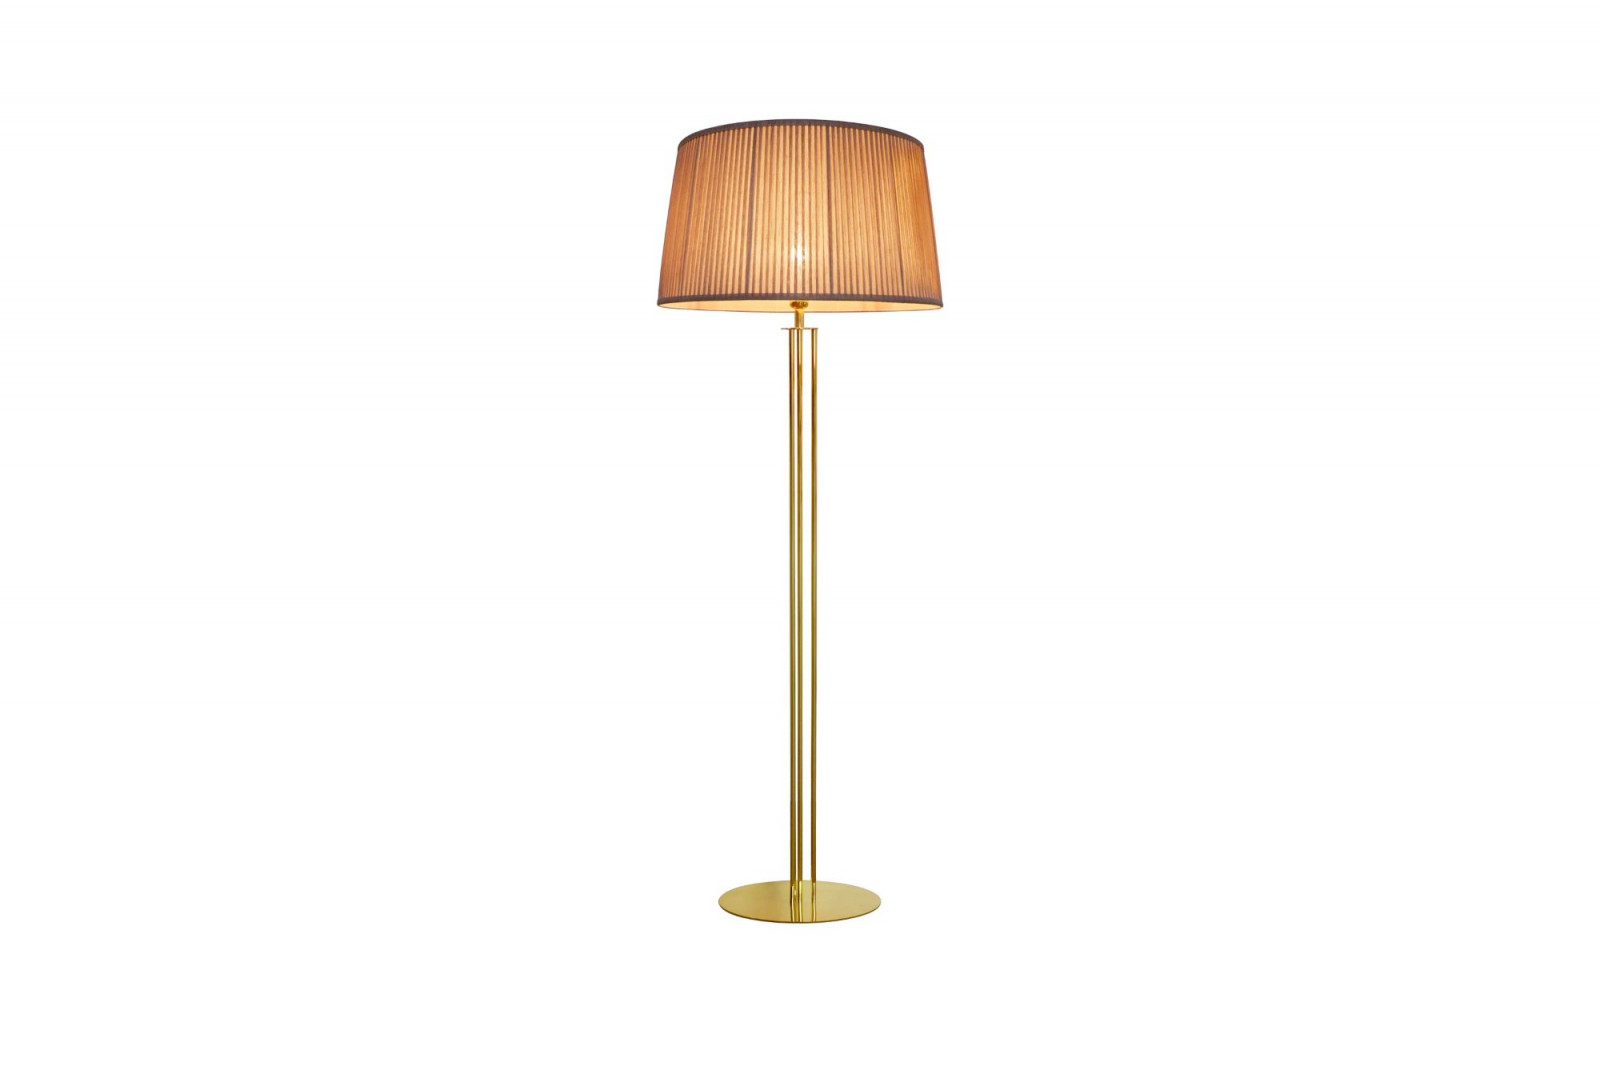 floor-lamp-elegant-modern-luxurious-polished-brass-pandora-gansk-1-1656-1600-1400-100